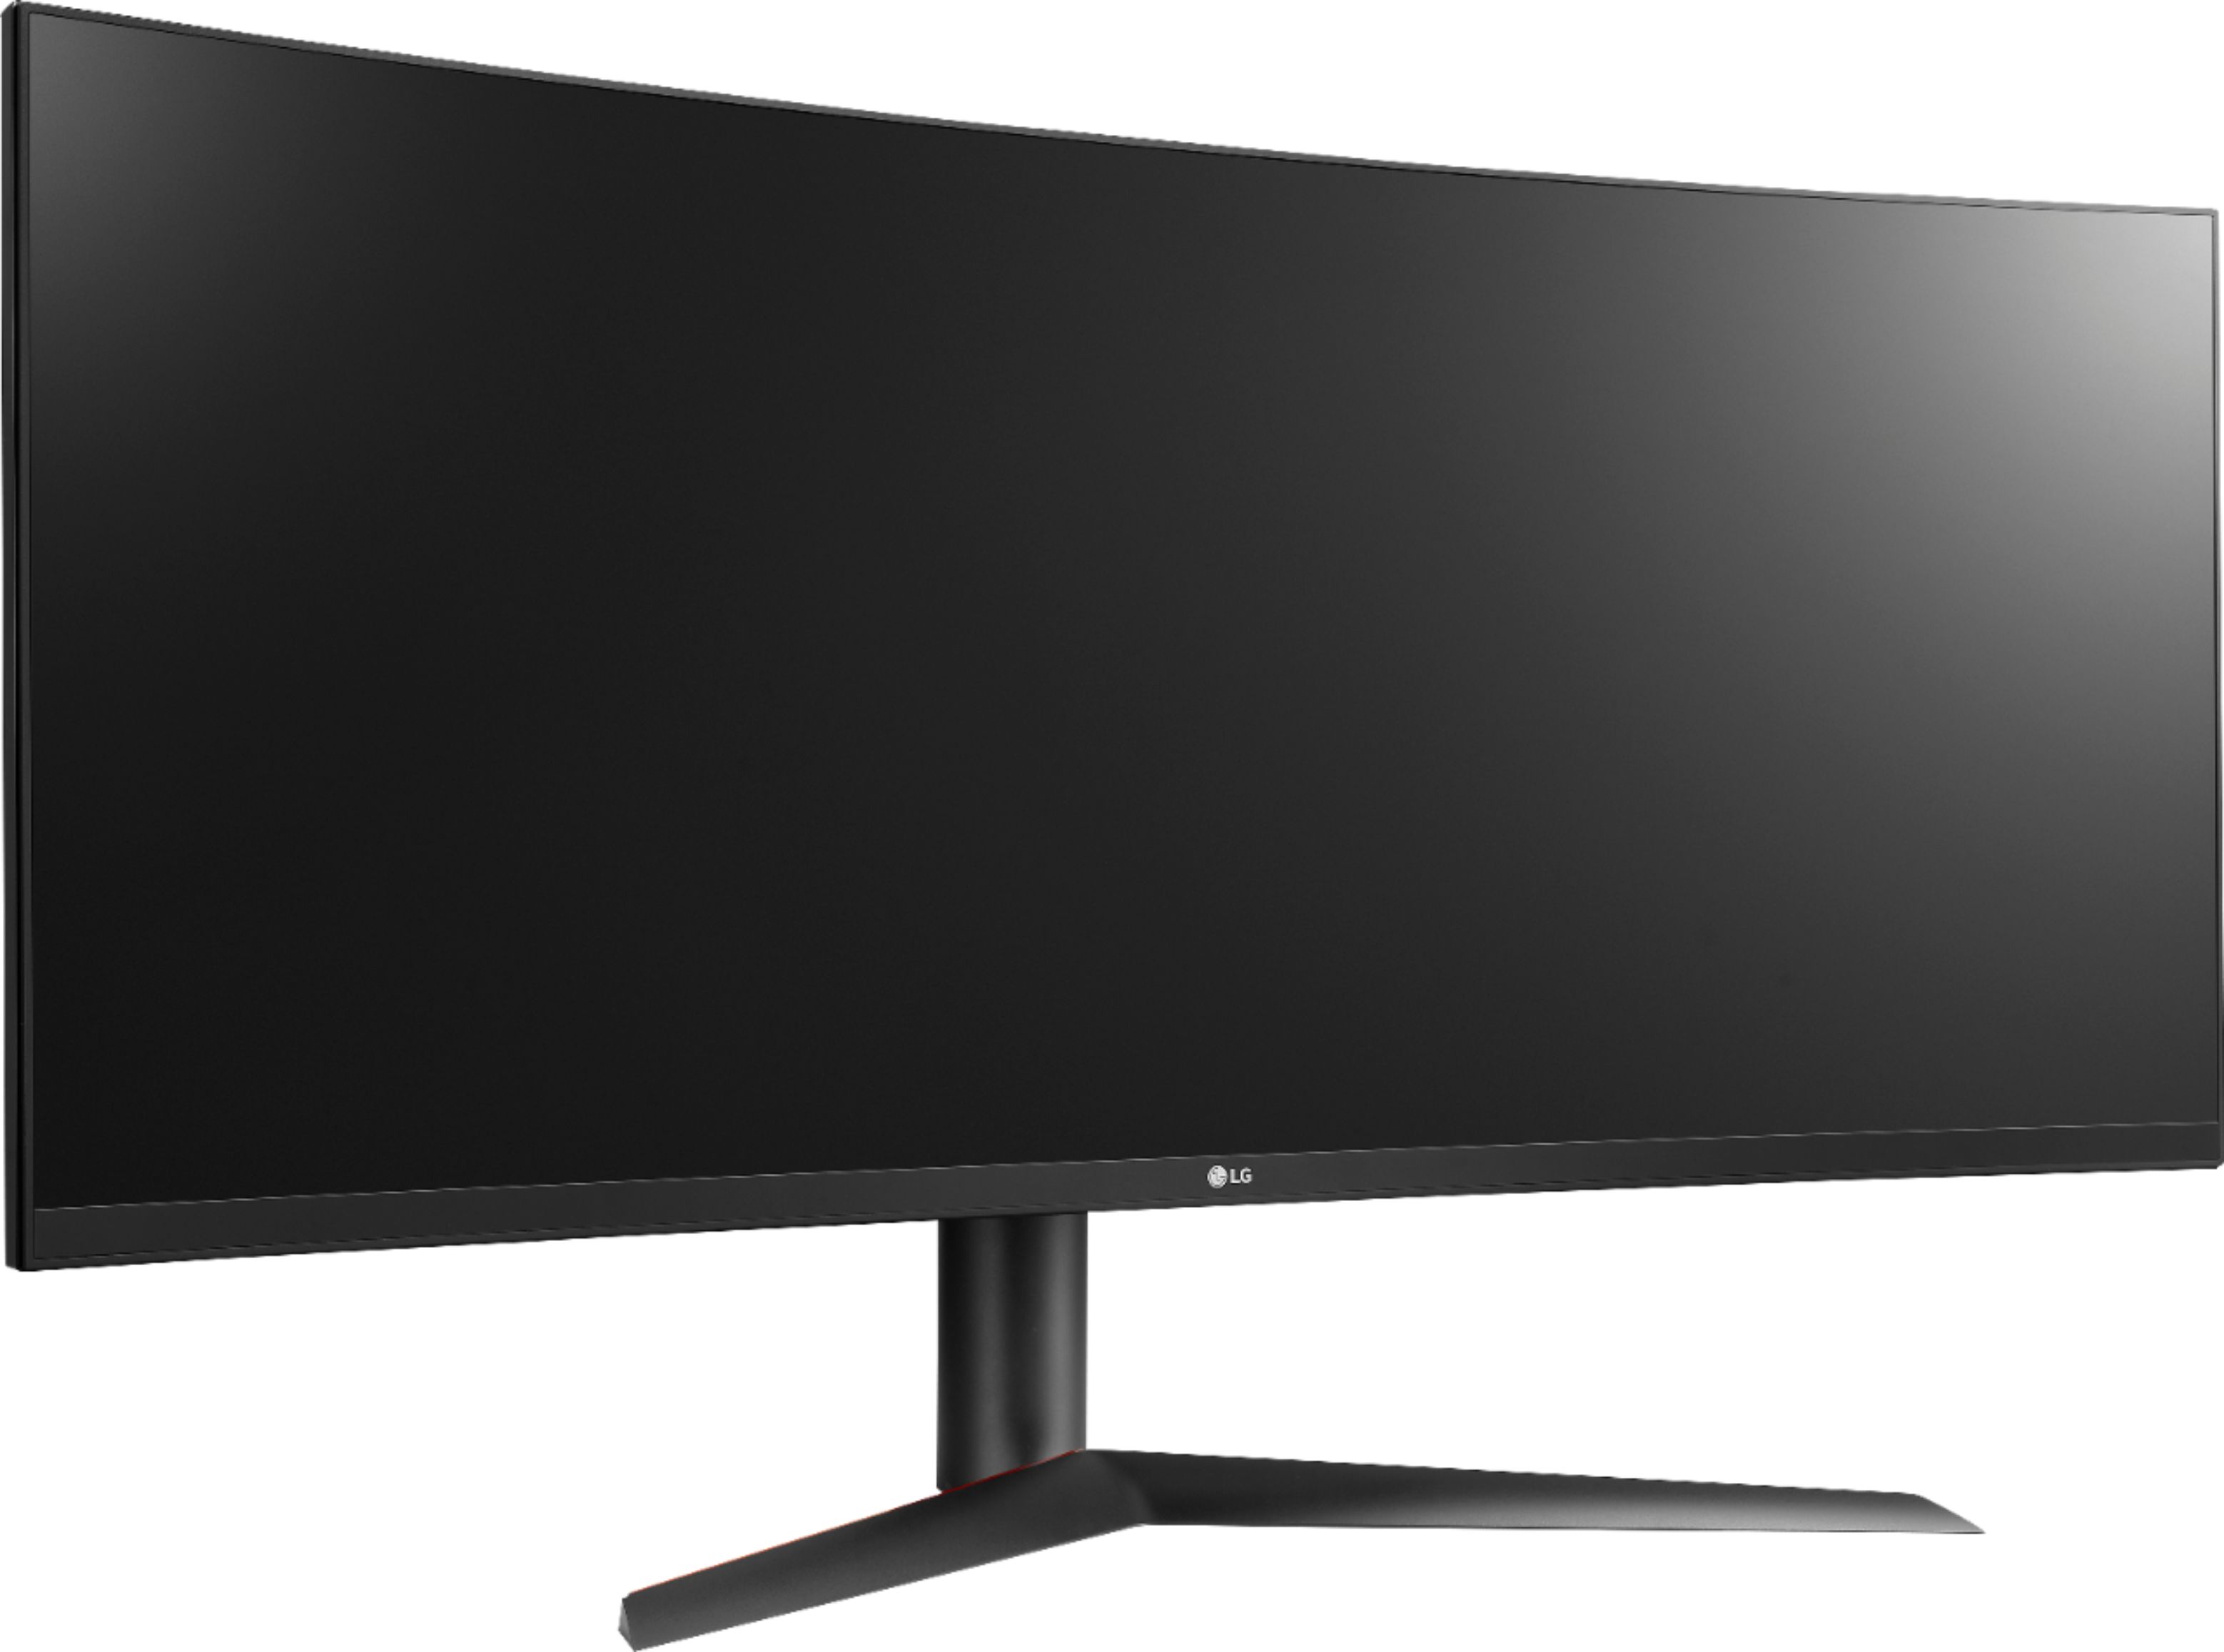 Angle View: LG - Geek Squad Certified Refurbished UltraGear 38" IPS LED UltraWide HD G-SYNC Monitor - Black